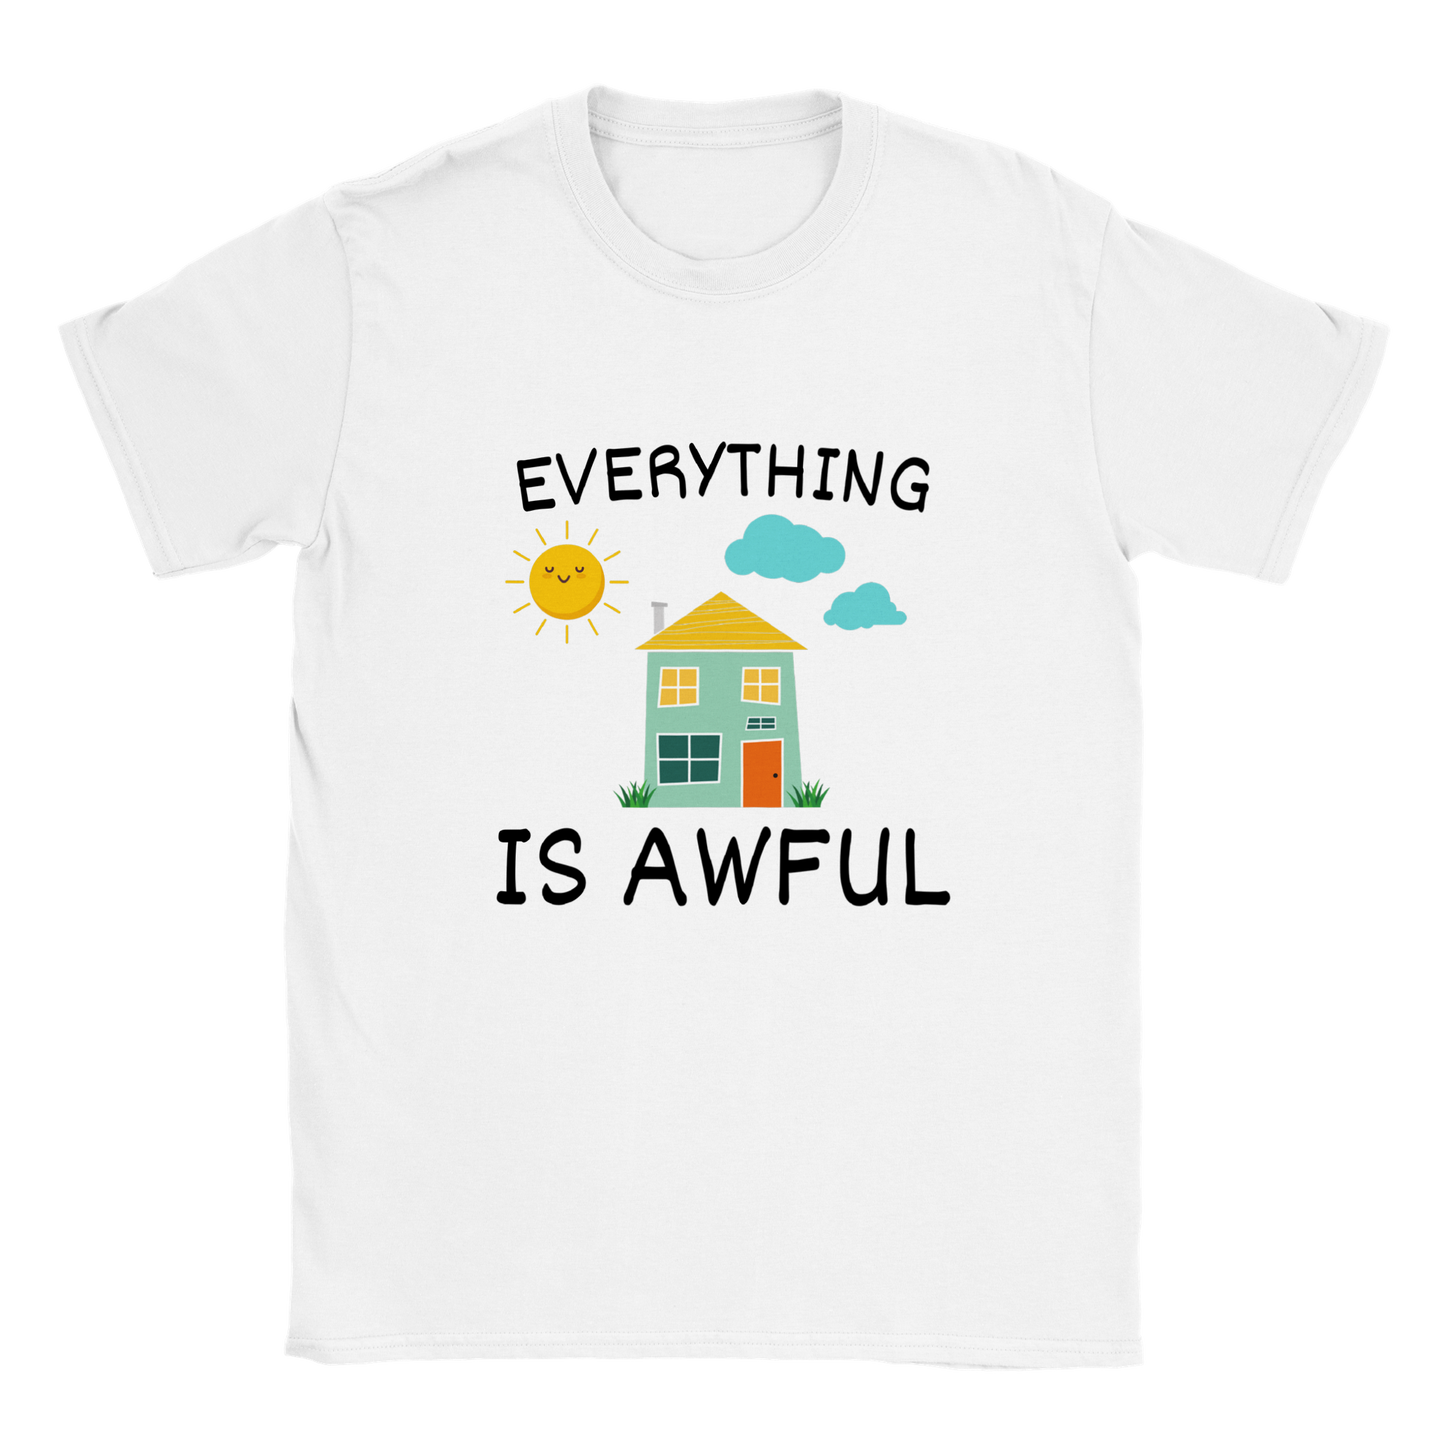 Everything is Awful - Classic Unisex Crewneck T-shirt